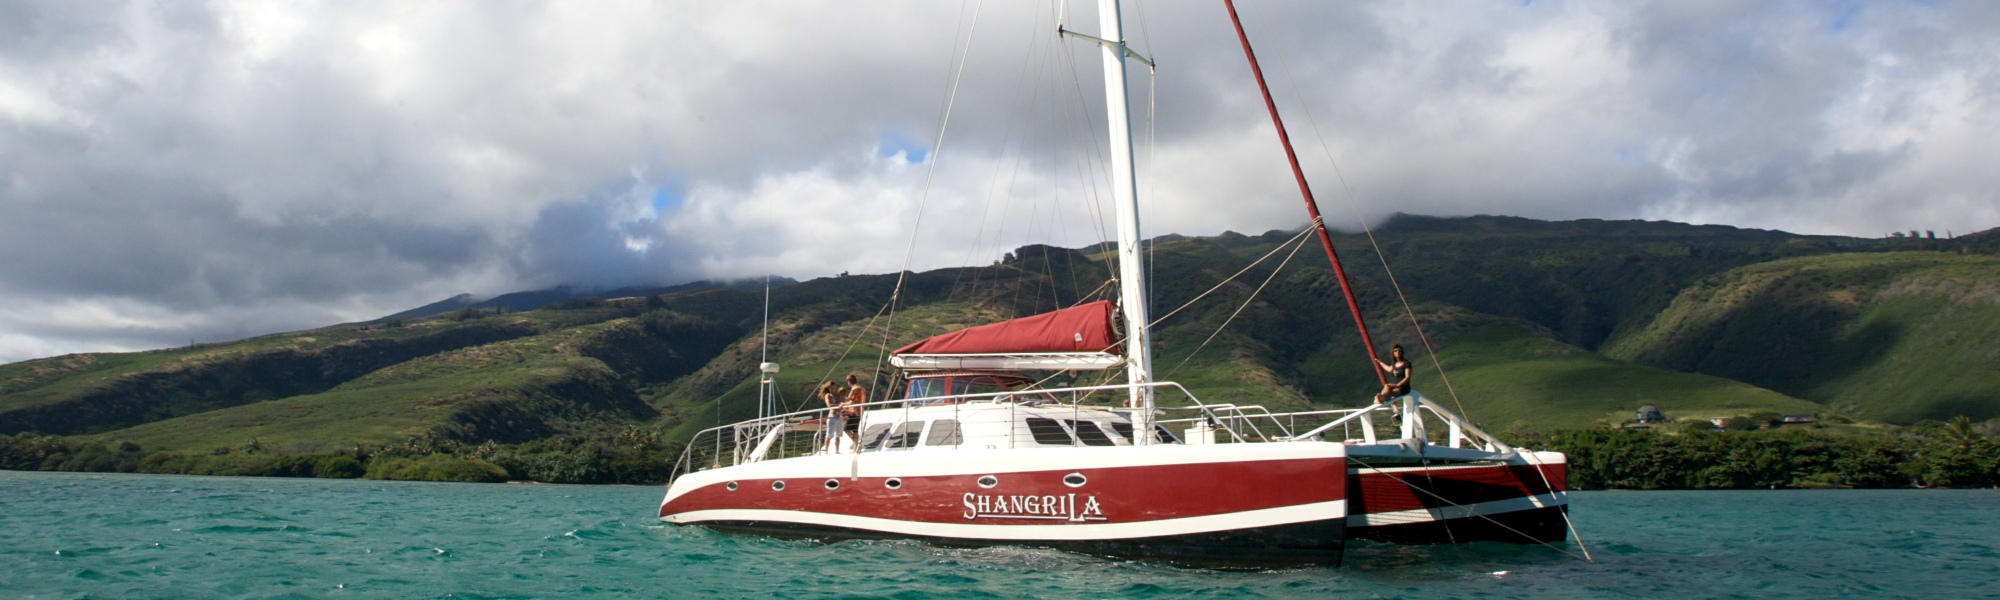 Shangrila Sailing Charters Maui Private Charters Maui Private Snorkeling Trips Maui Private Sunset Sail Maui Private Sailing